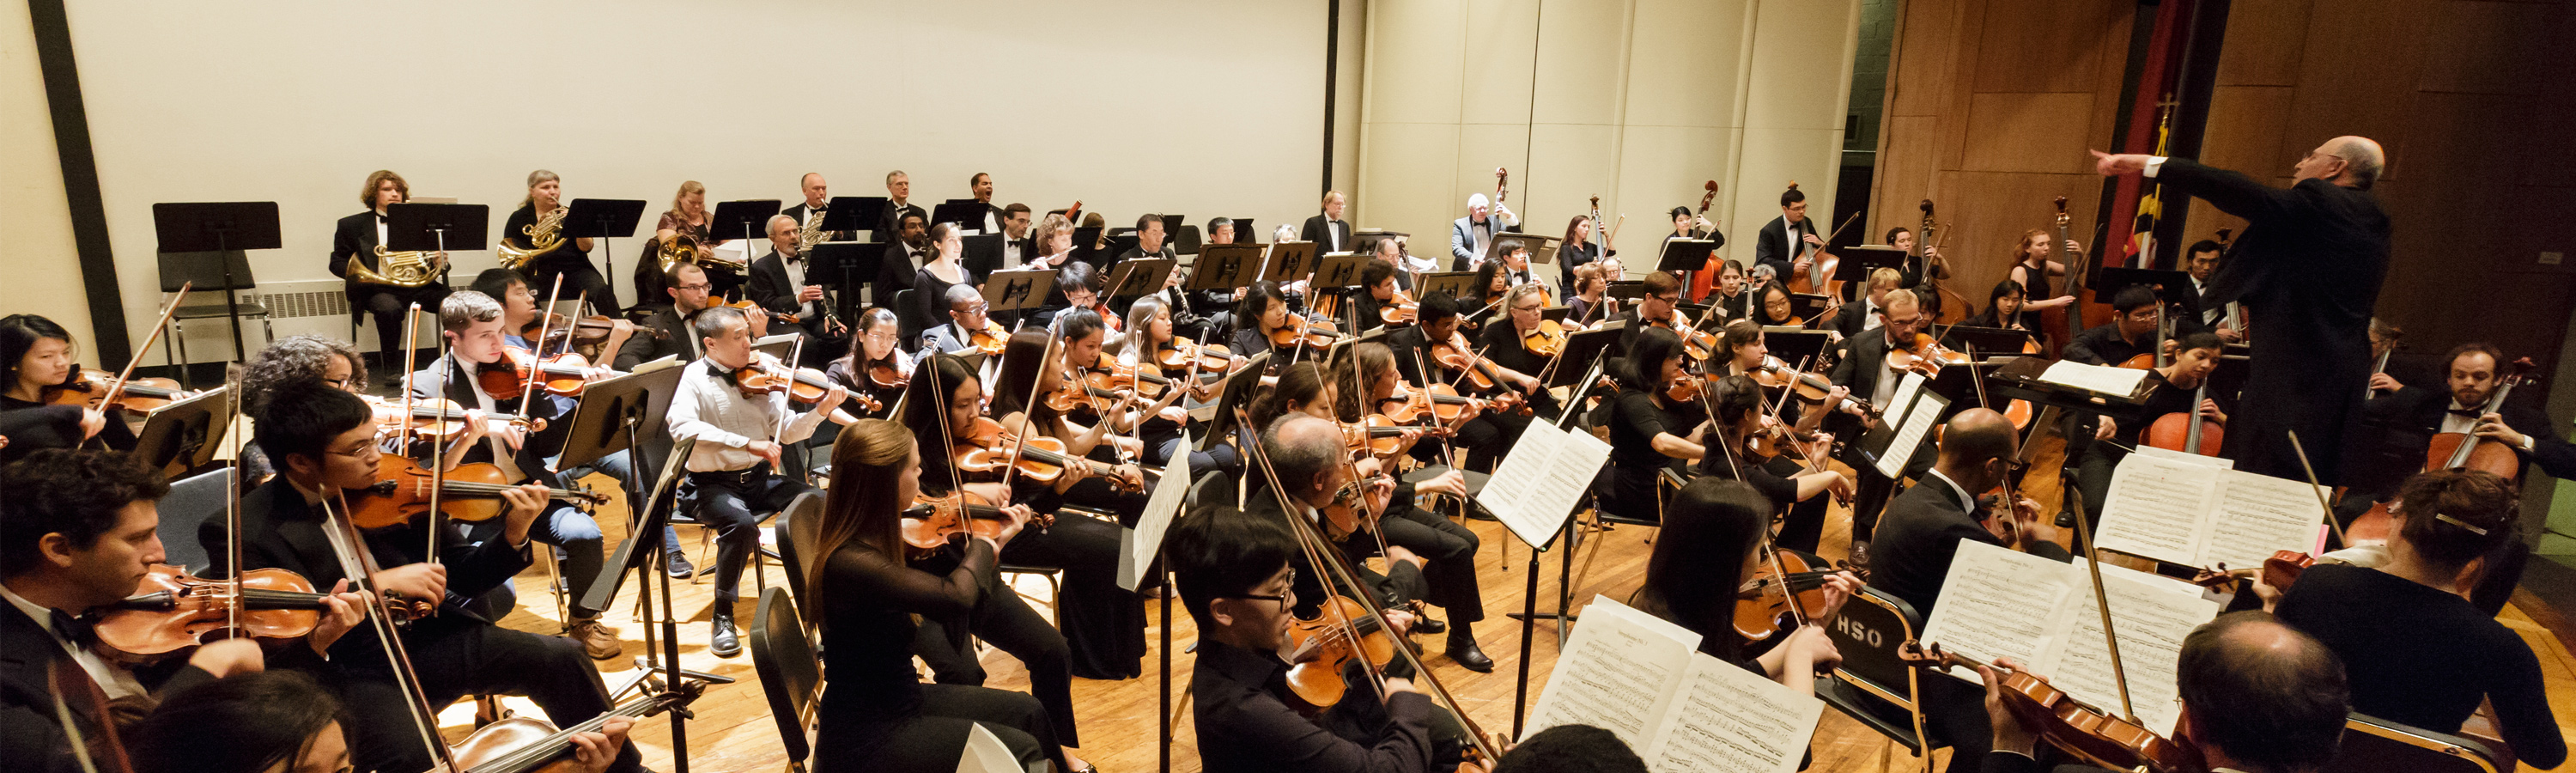 Hopkins Symphony Orchestra Evenings Part II - Exquisite Revolution: Mendelssohn’s Violin Concerto 